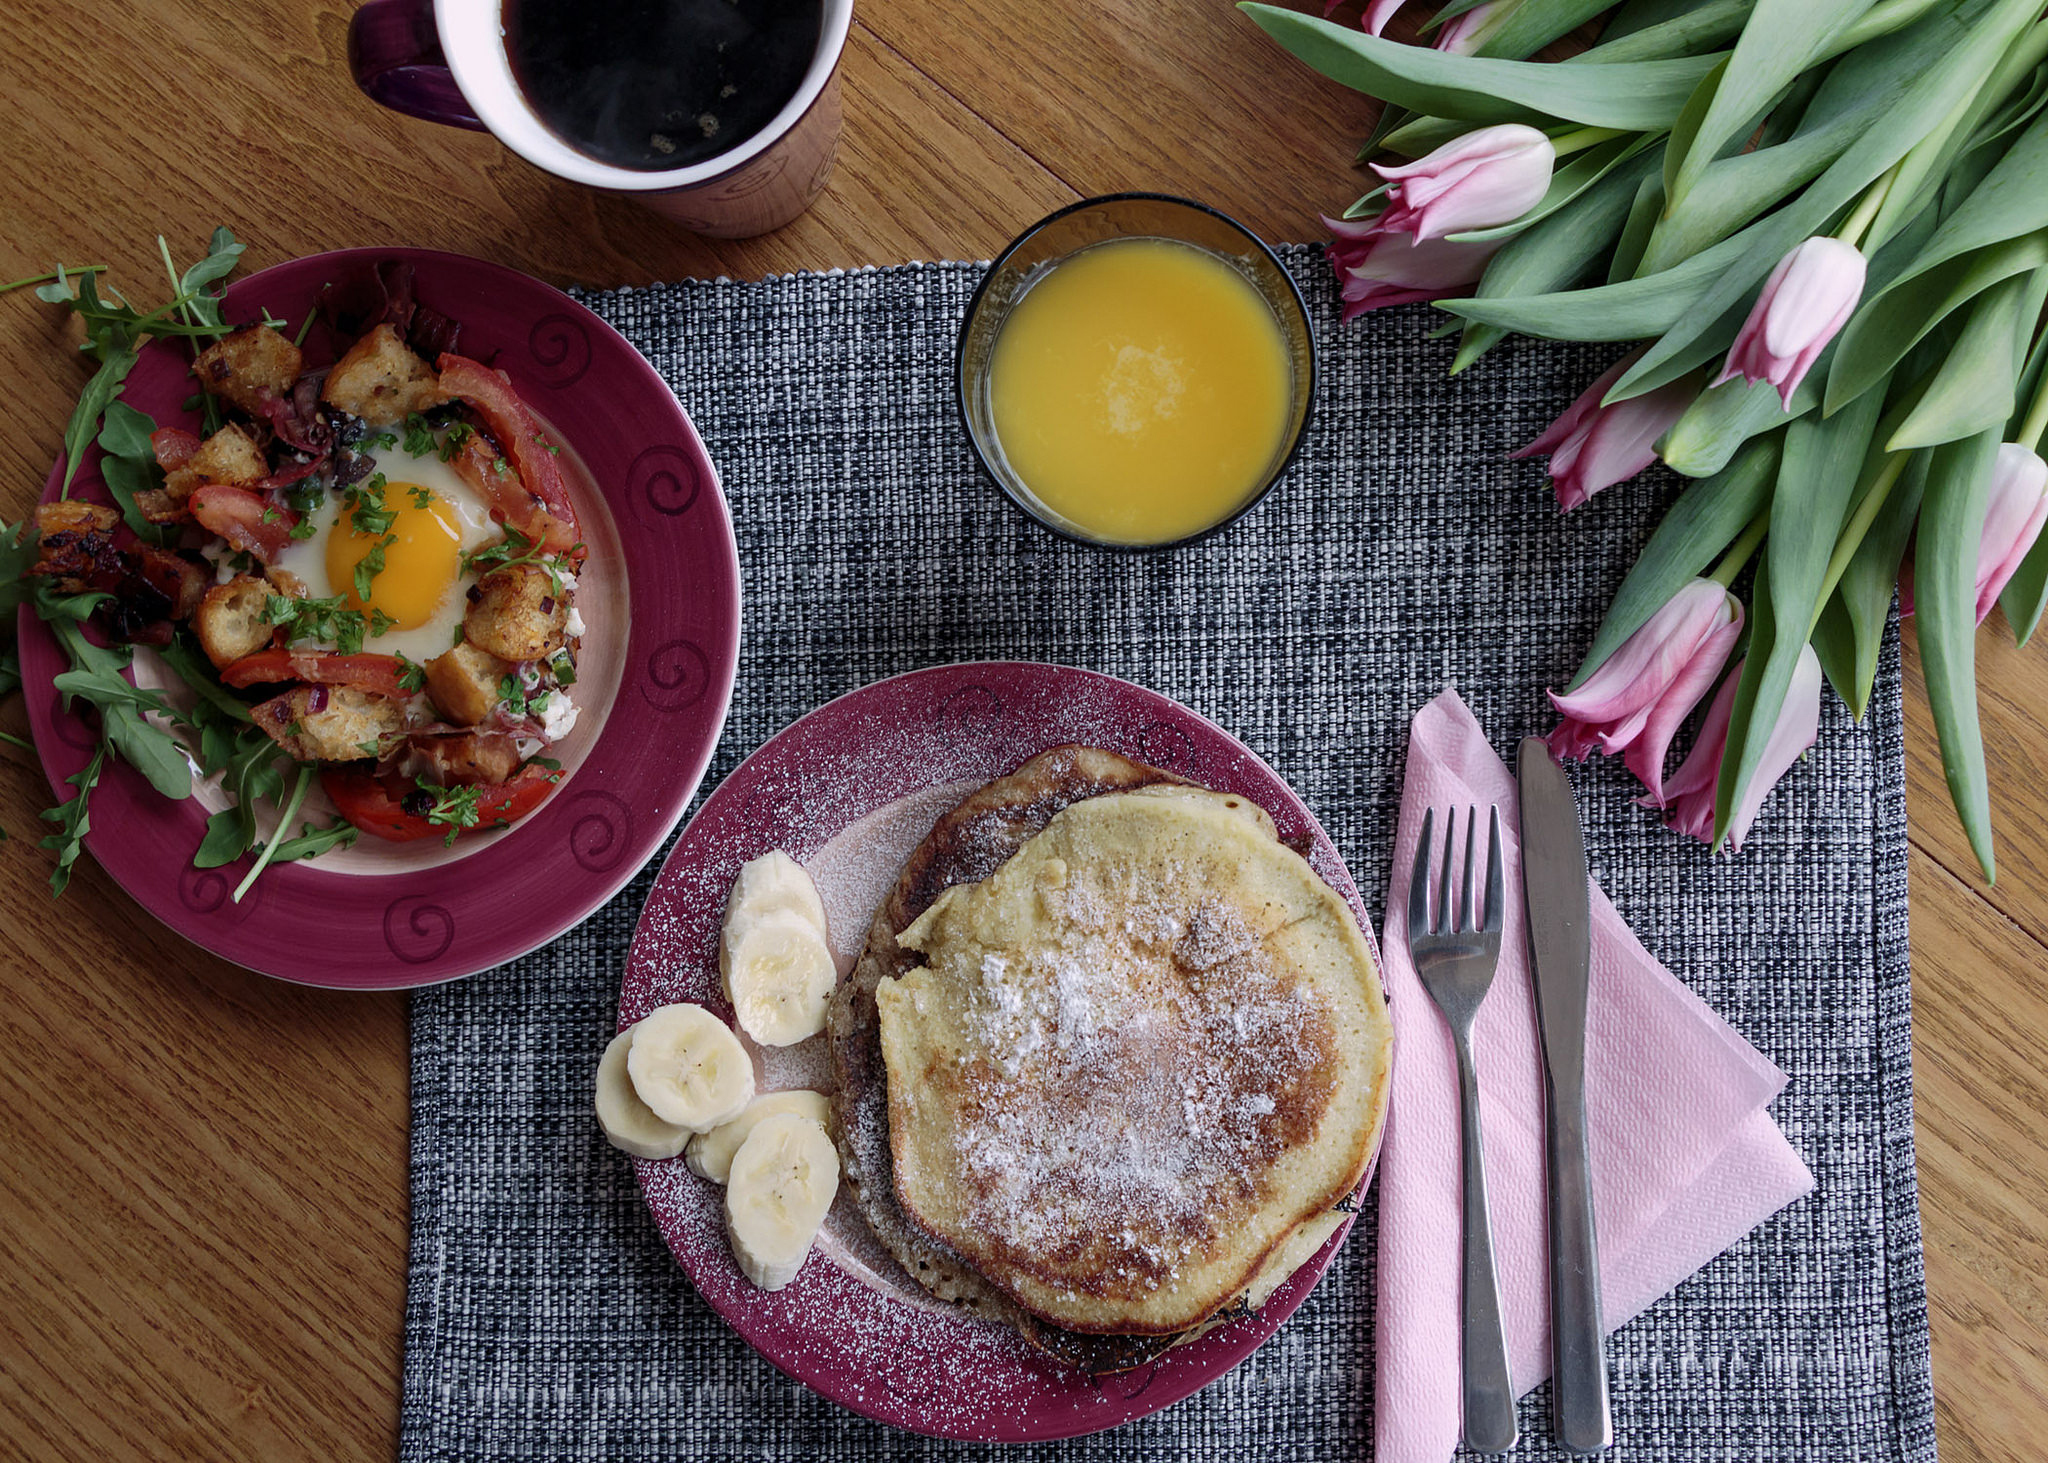 Рабочий завтрак. Завтрак. Весенний завтрак. Завтрак с цветами. Завтрак на столе.